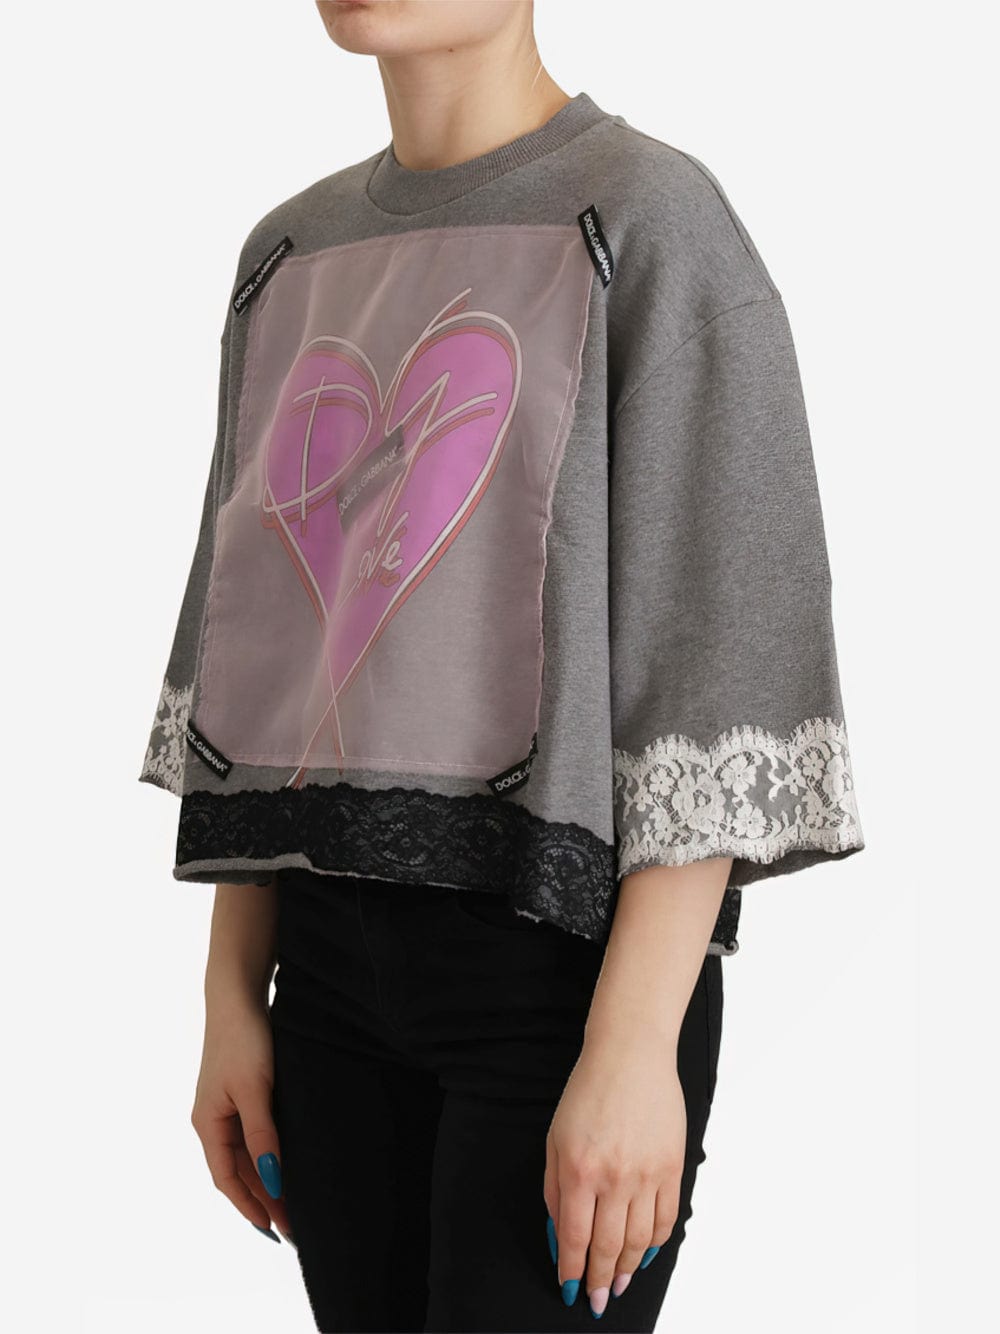 Dolce & Gabbana DG Love Lace-Trim Sweatshirt